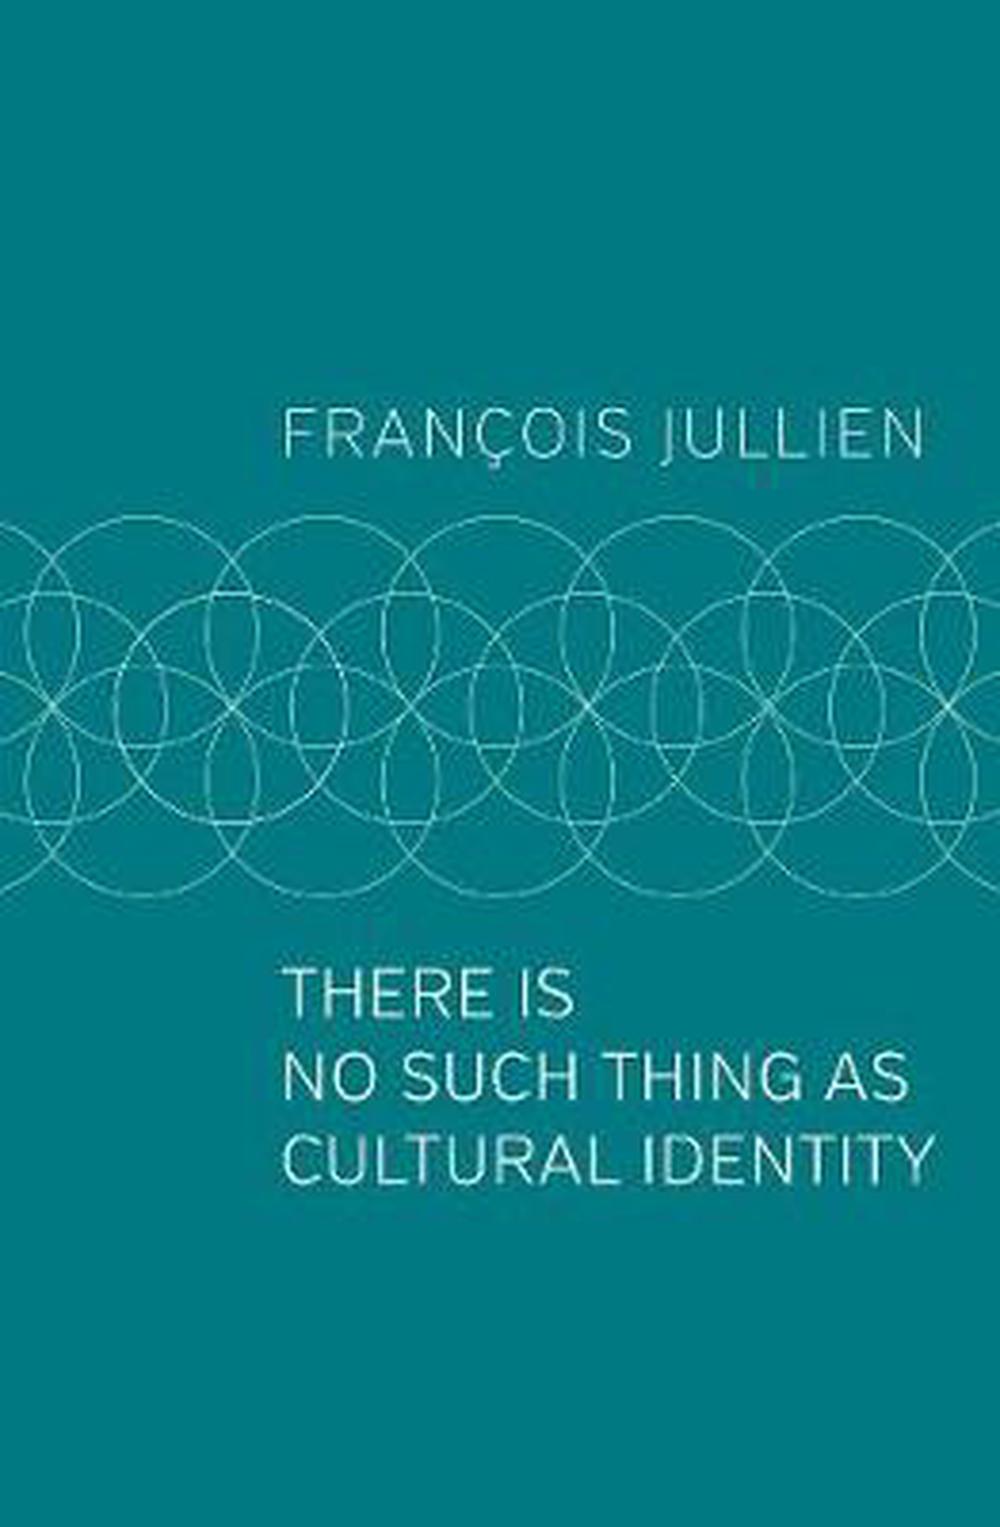 There Is No Such Thing as Cultural Identity ร้านหนังสือและสิ่งของ เป็นร้านหนังสือภาษาอังกฤษหายาก และร้านกาแฟ หรือ บุ๊คคาเฟ่ ตั้งอยู่สุขุมวิท กรุงเทพ